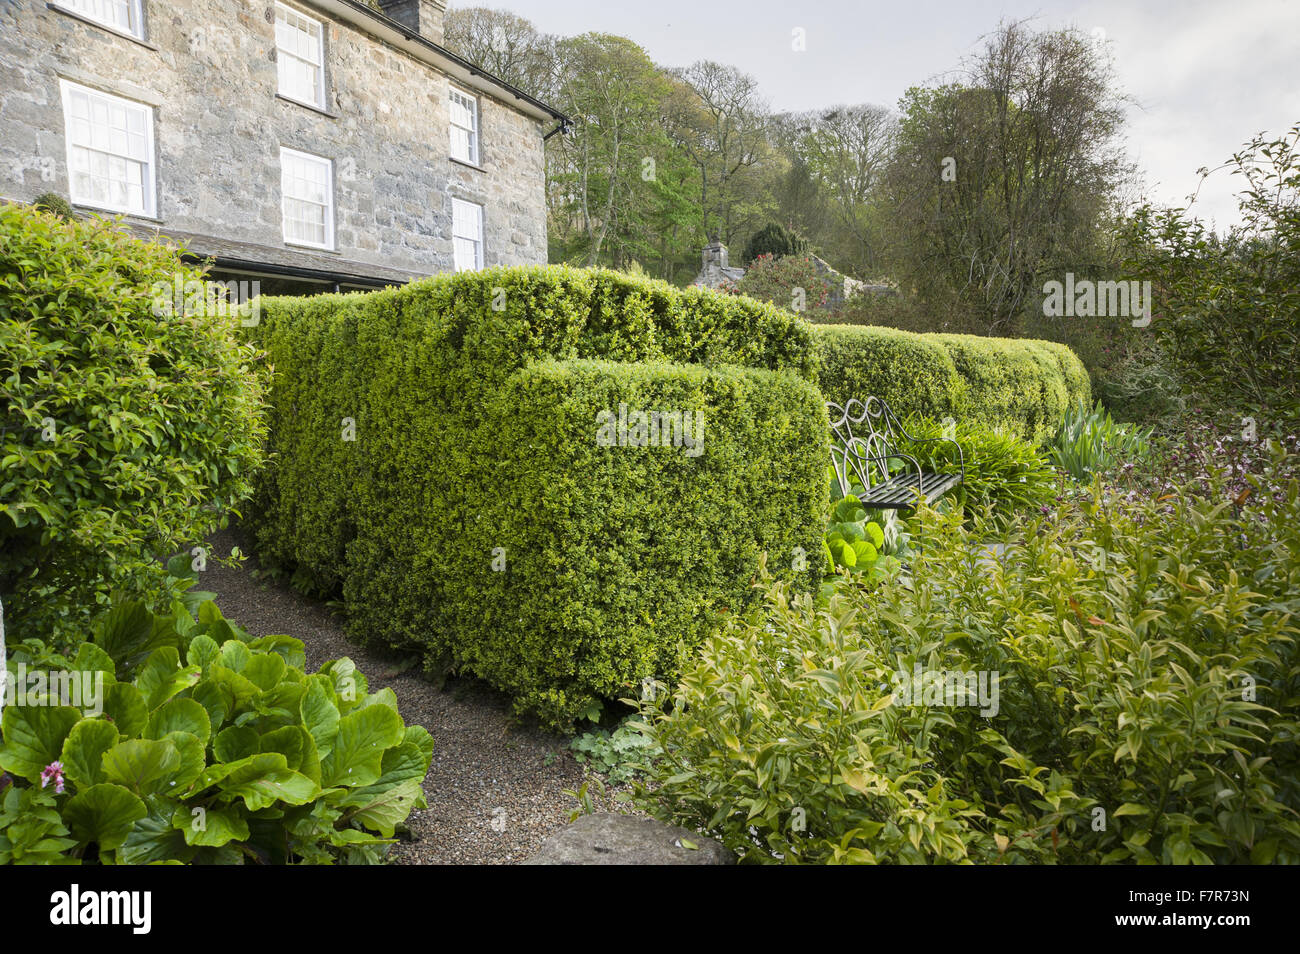 Box hedging, bergenias, ferns and sarcococca, with the house behind, at Plas yn Rhiw, Gwynedd. The gardens at Plas yn Rhiw have spectacular views across Cardigan Bay. Stock Photo